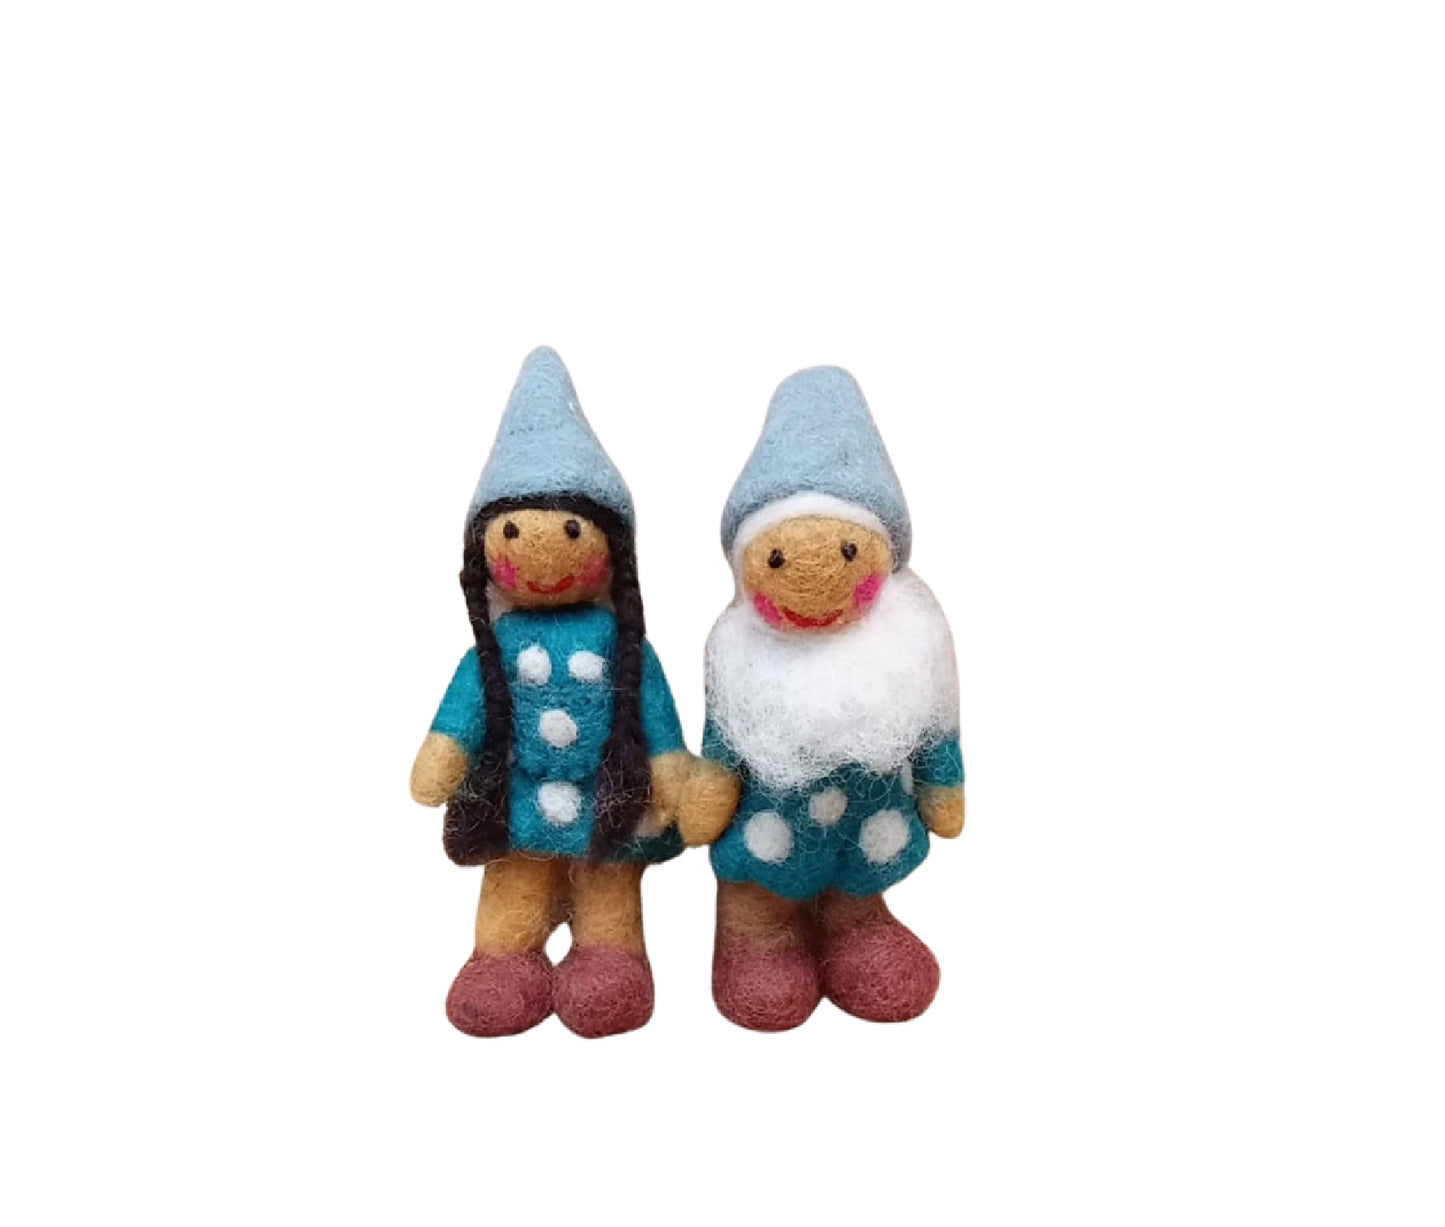 A pair of felt ed toydolls: mushroom elves in blue, from Himalayan felt co